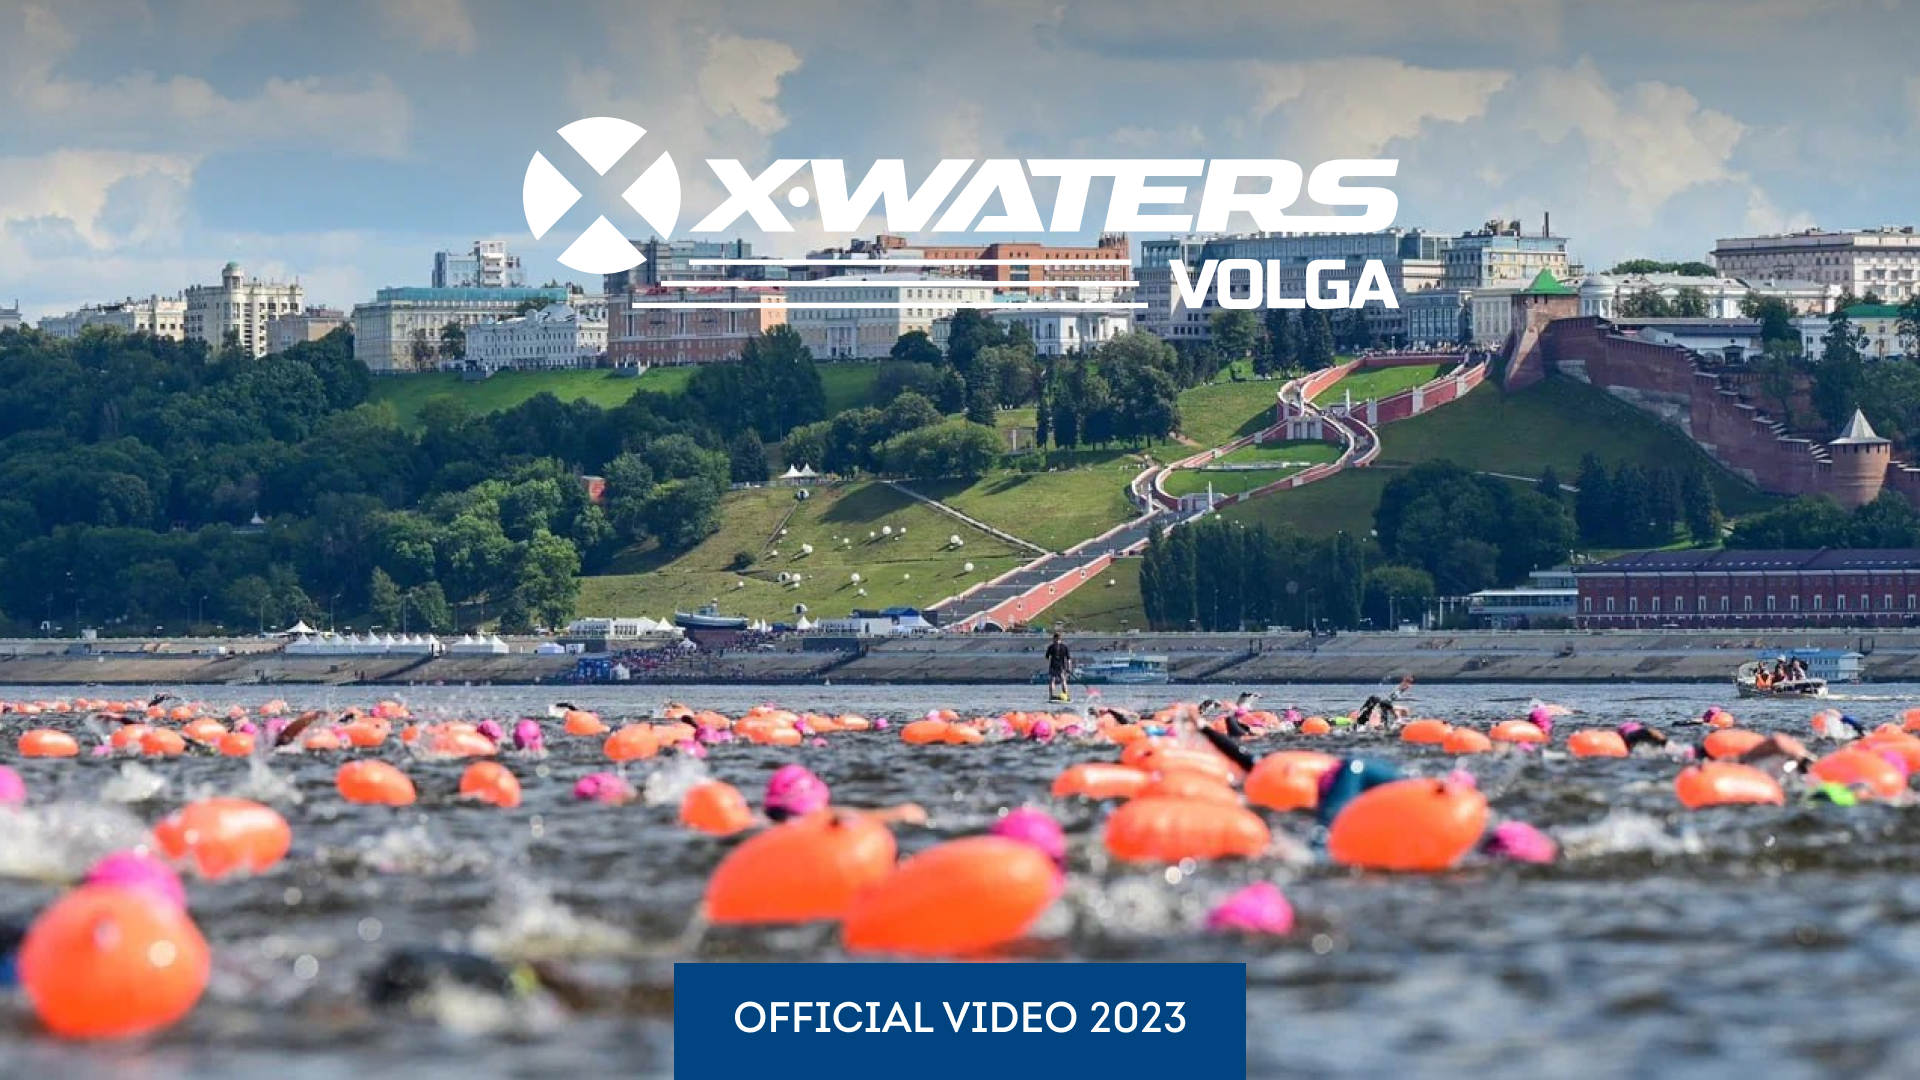 X-WATERS Volga 2023 | Official video